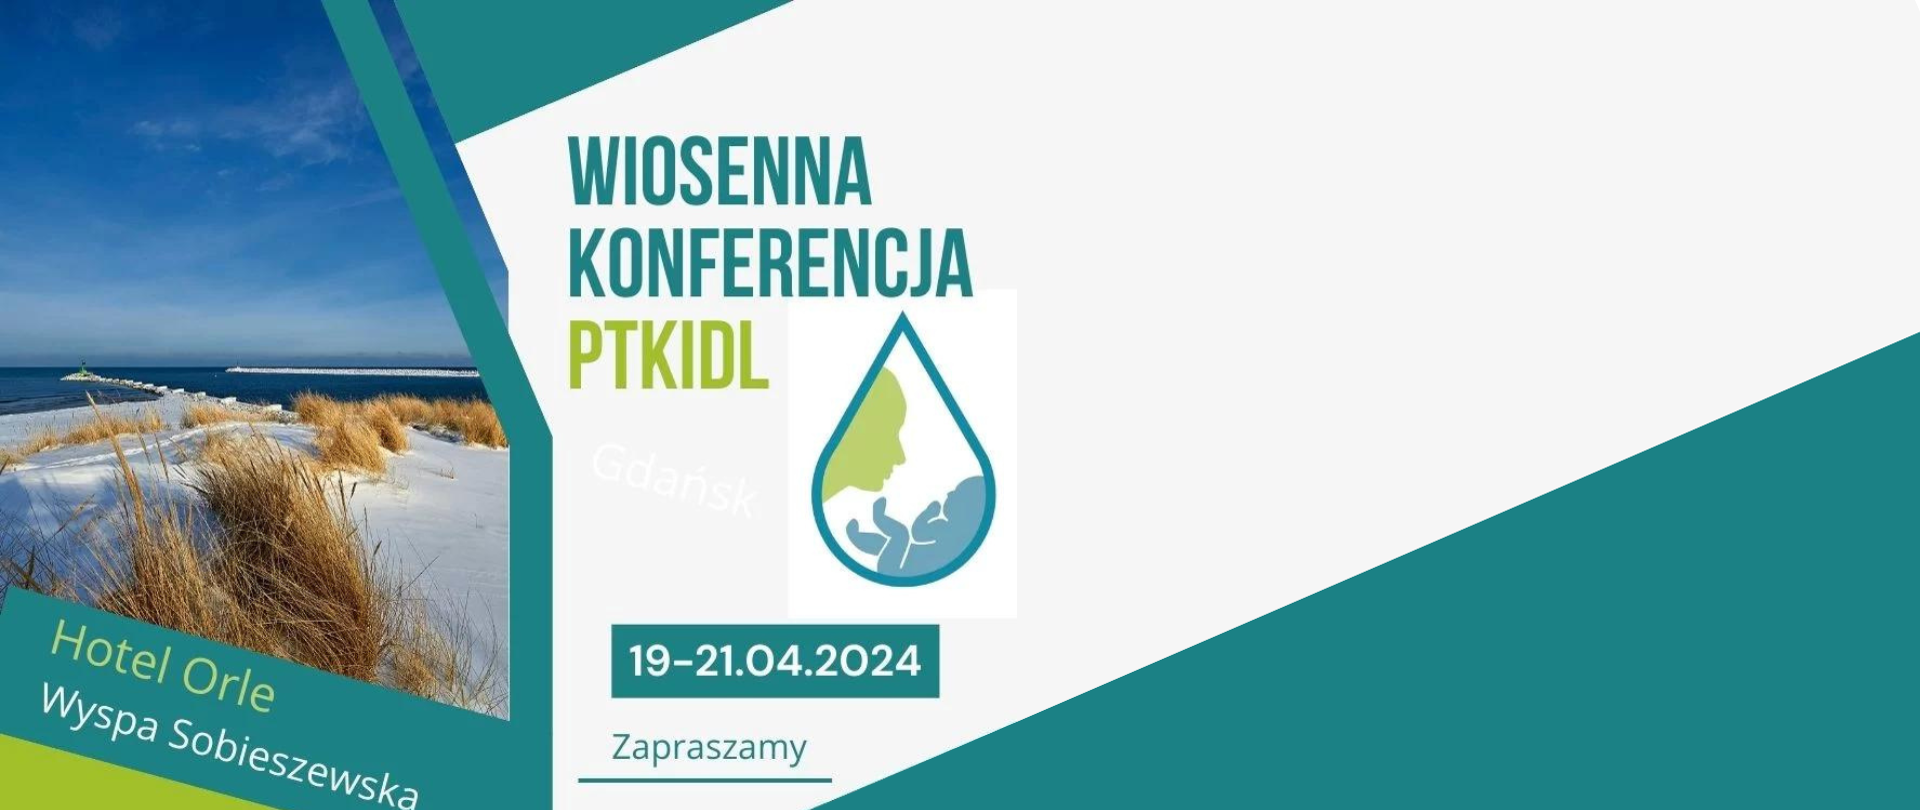 Baner konferencji "Wiosenna konferencja PTKIDL"